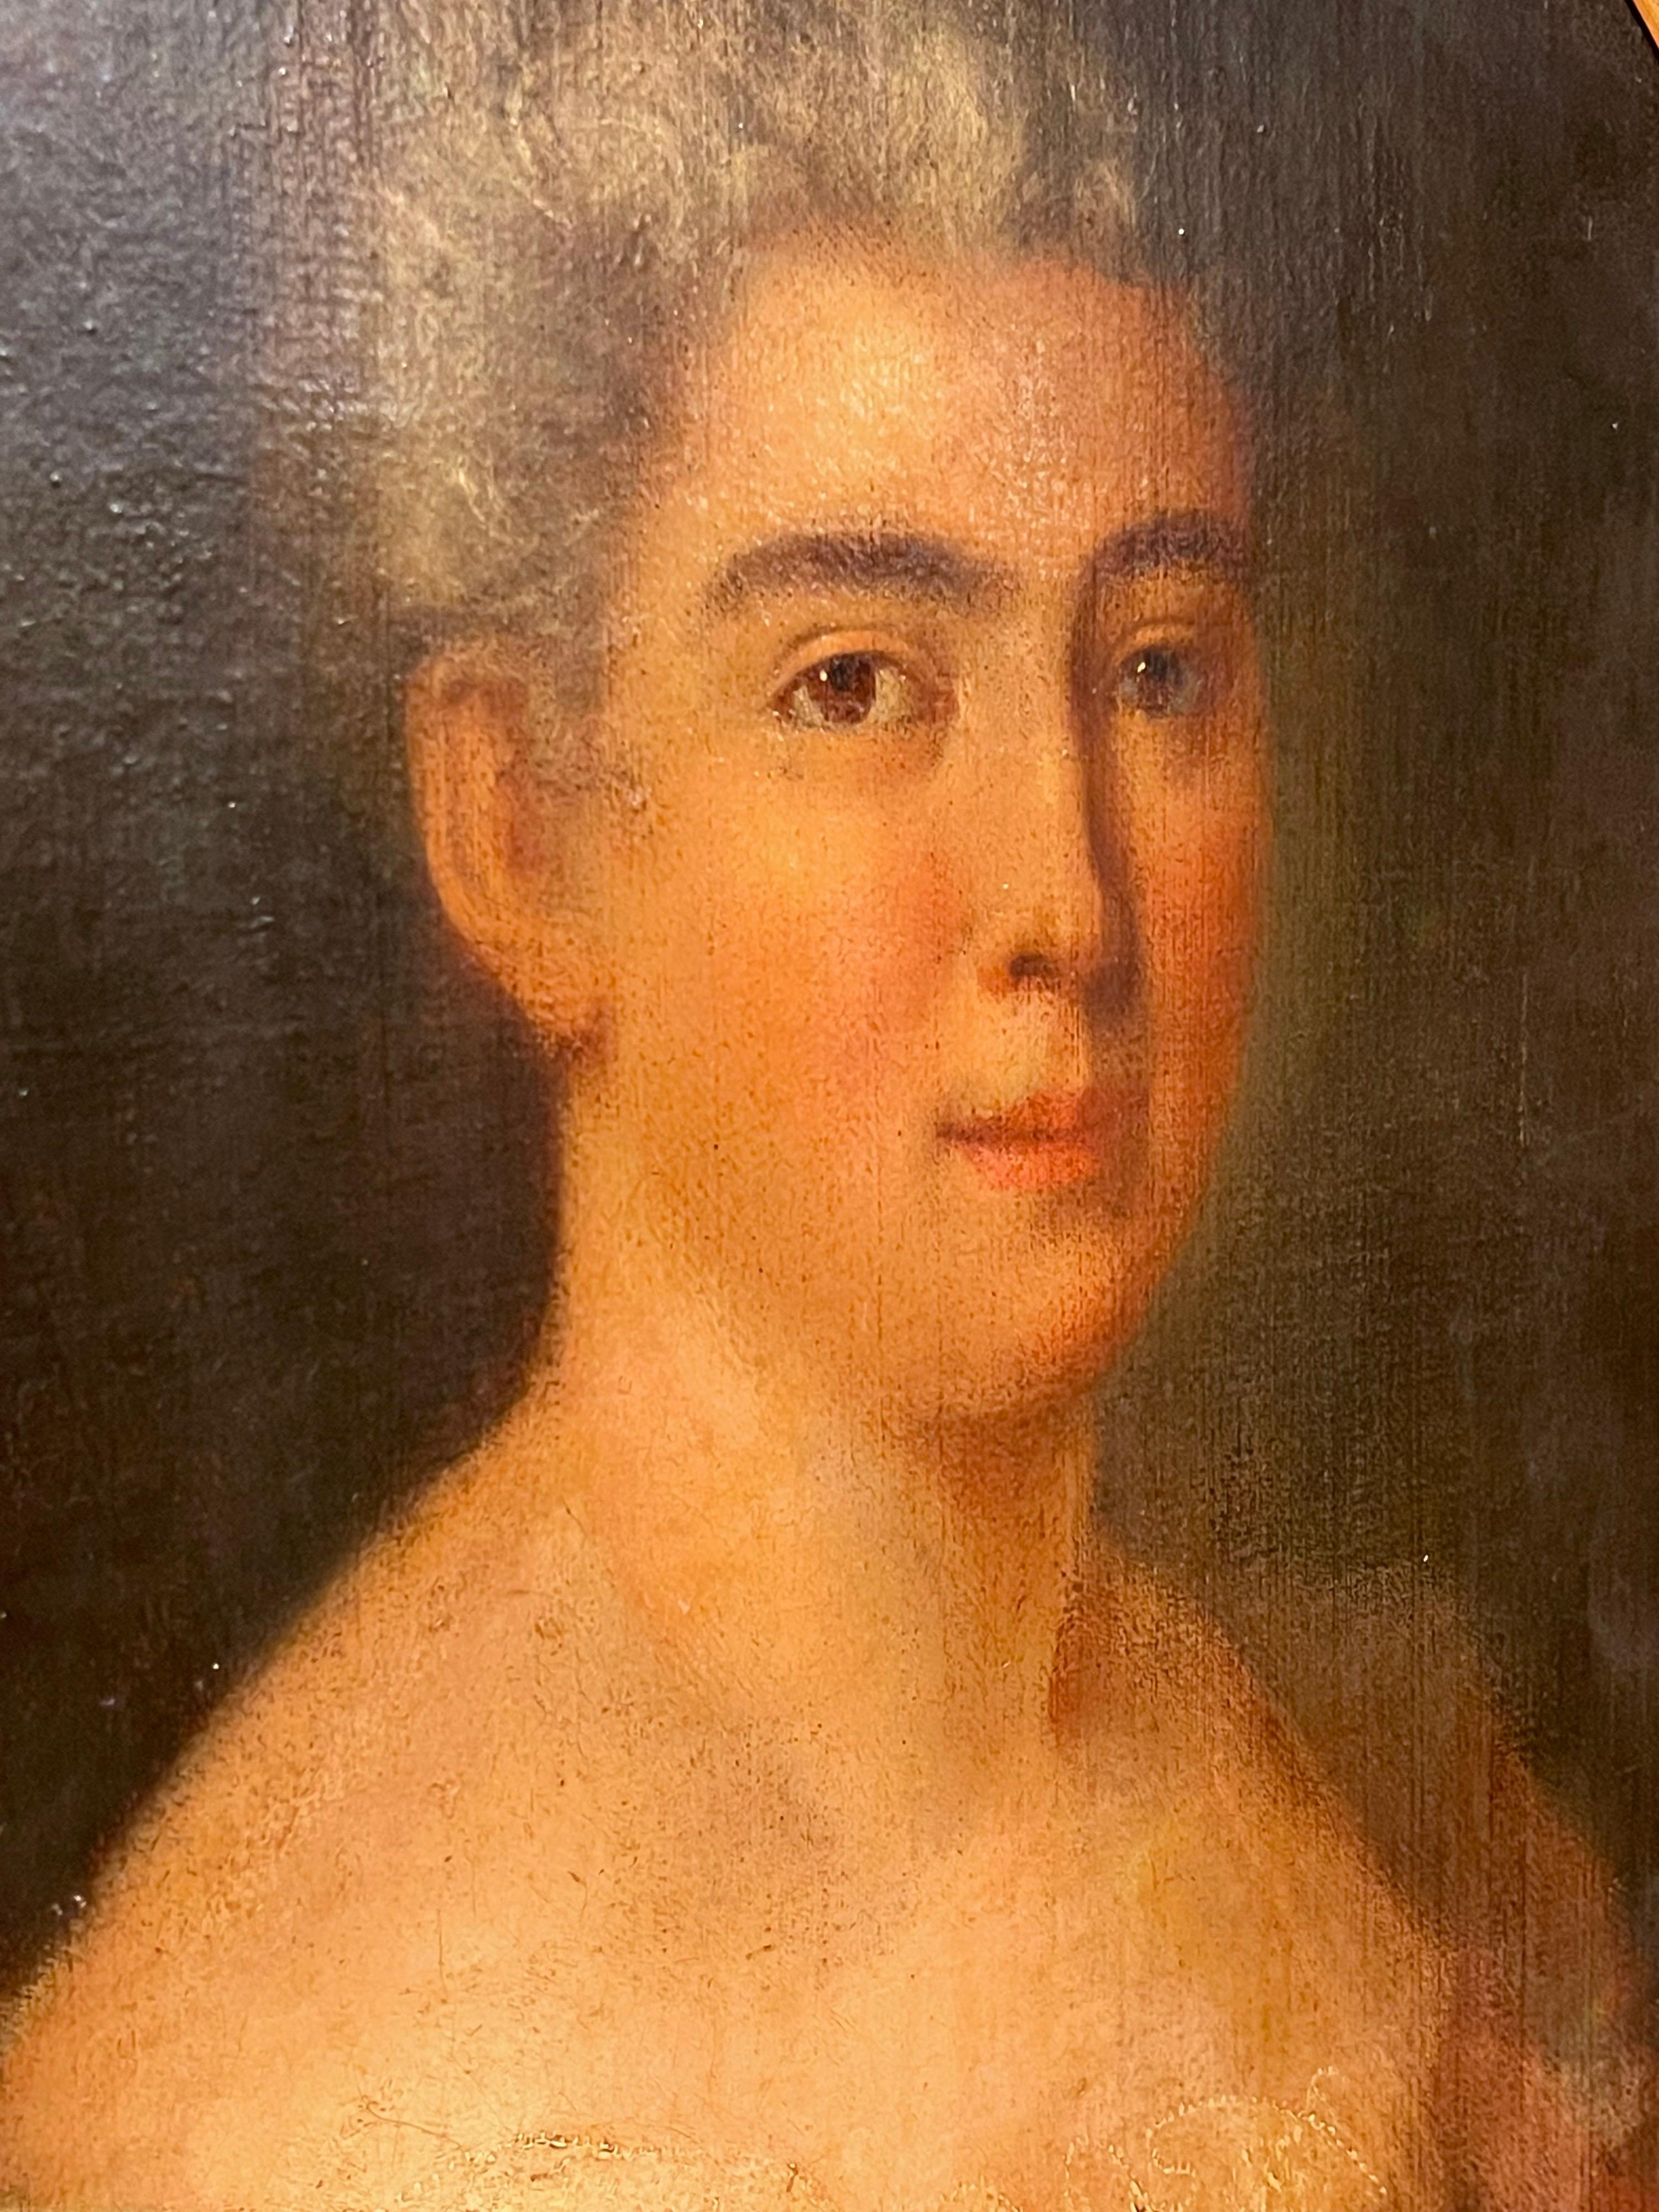 18th century noblewoman